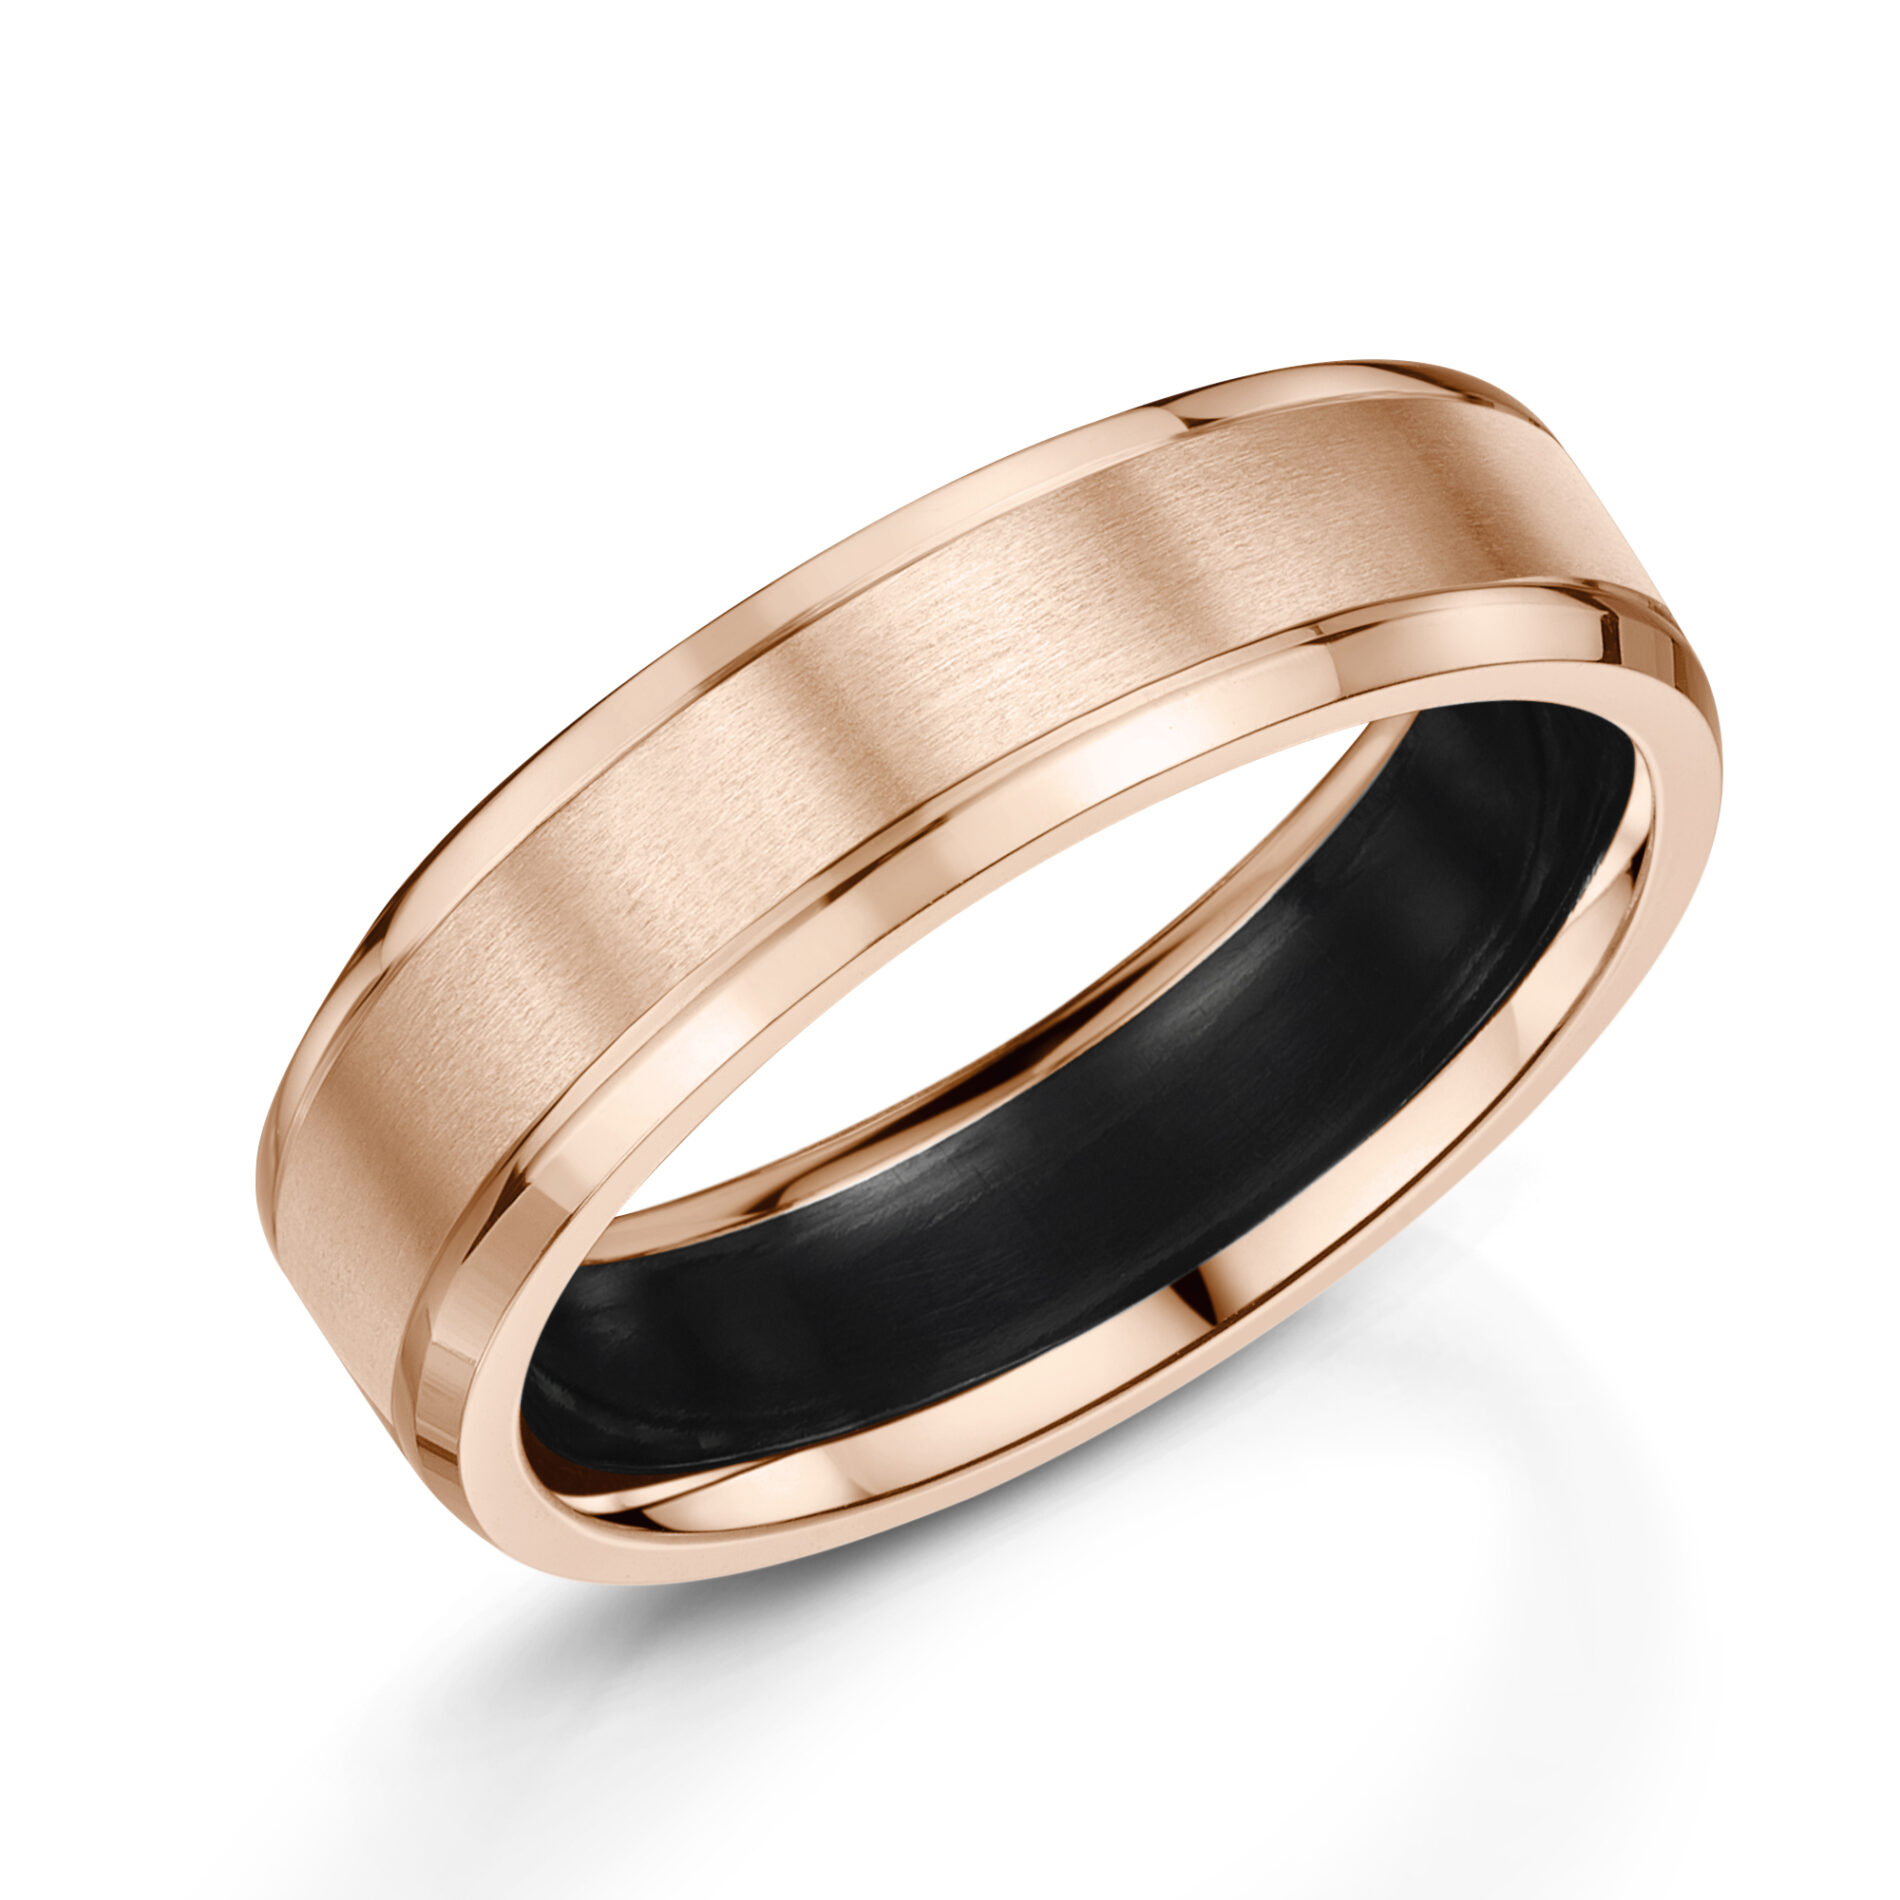 Rose Gold Brushed And Polished Flat Profile Ring With Zirconium Inlay